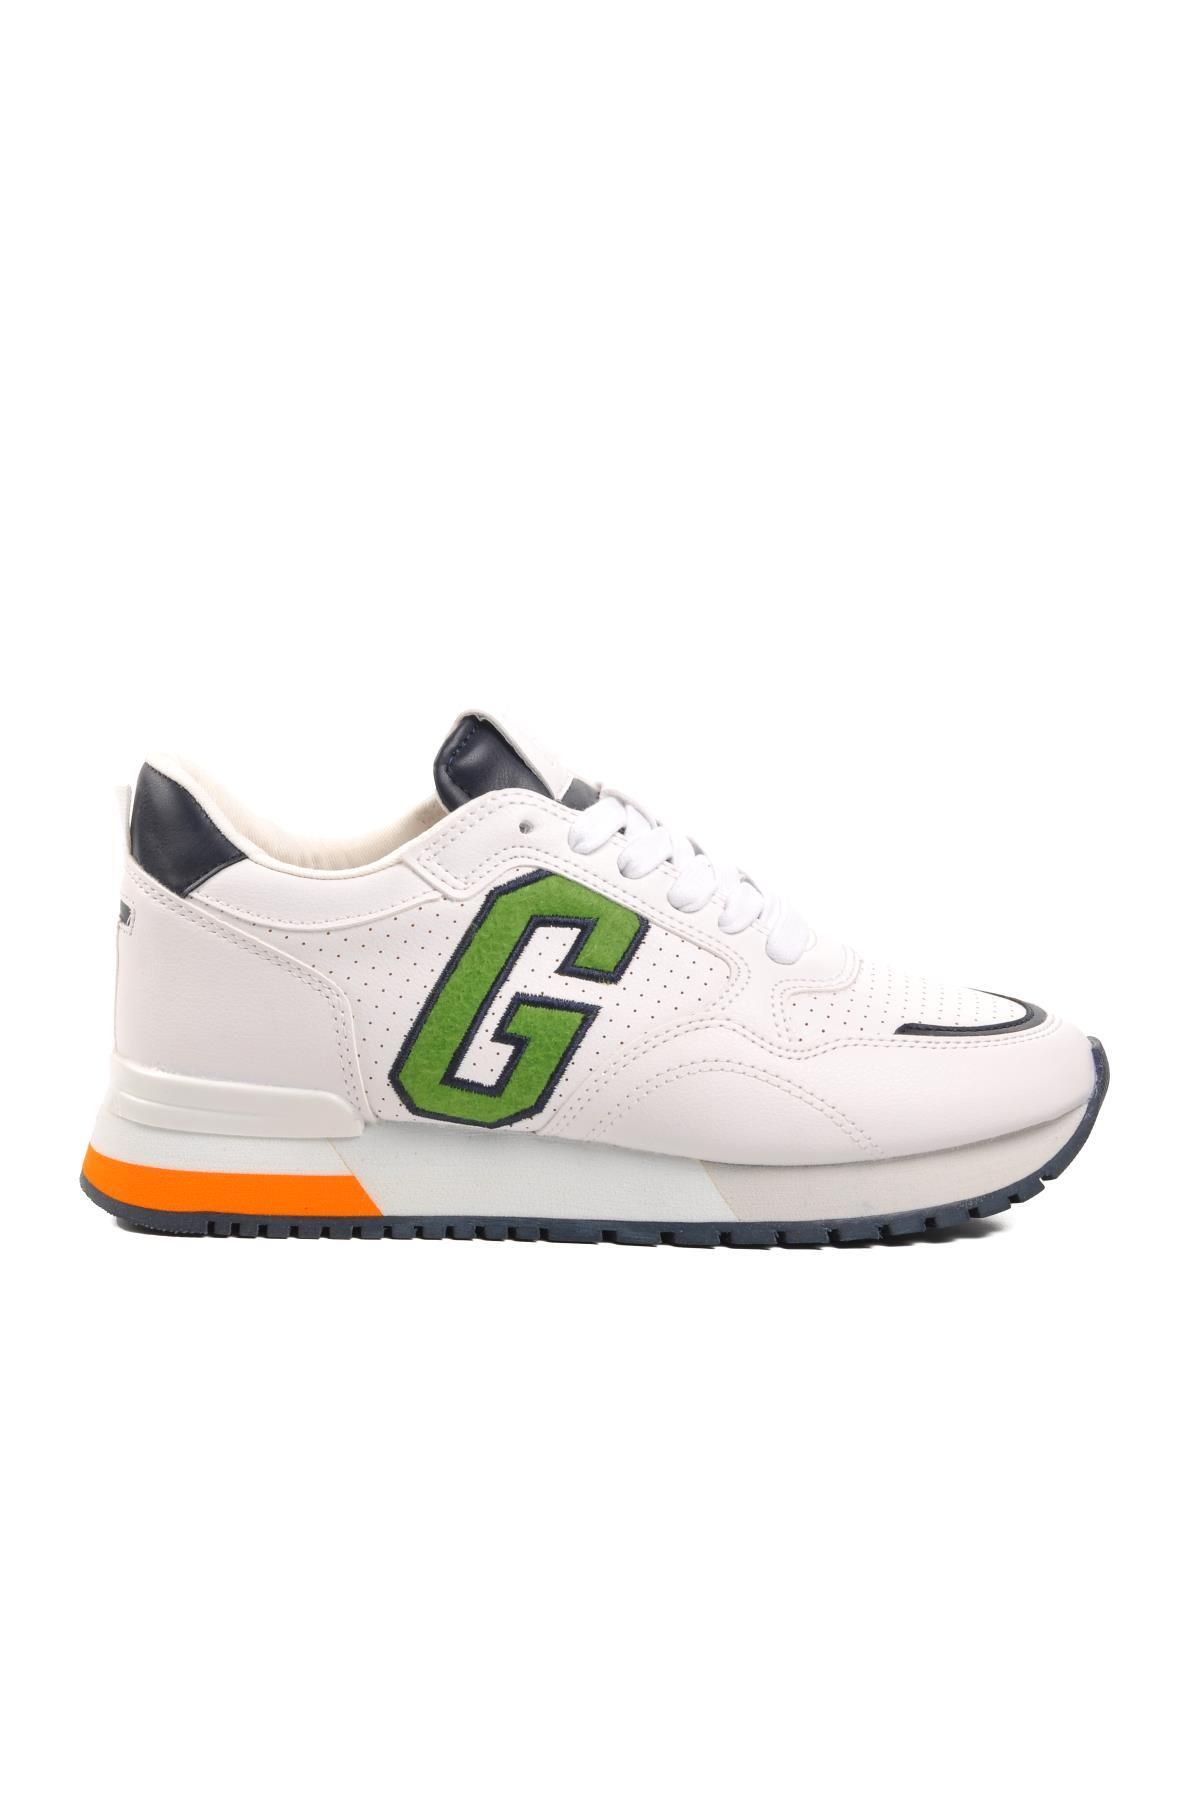 GAP Gp-1033 Beyaz Unisex Sneaker